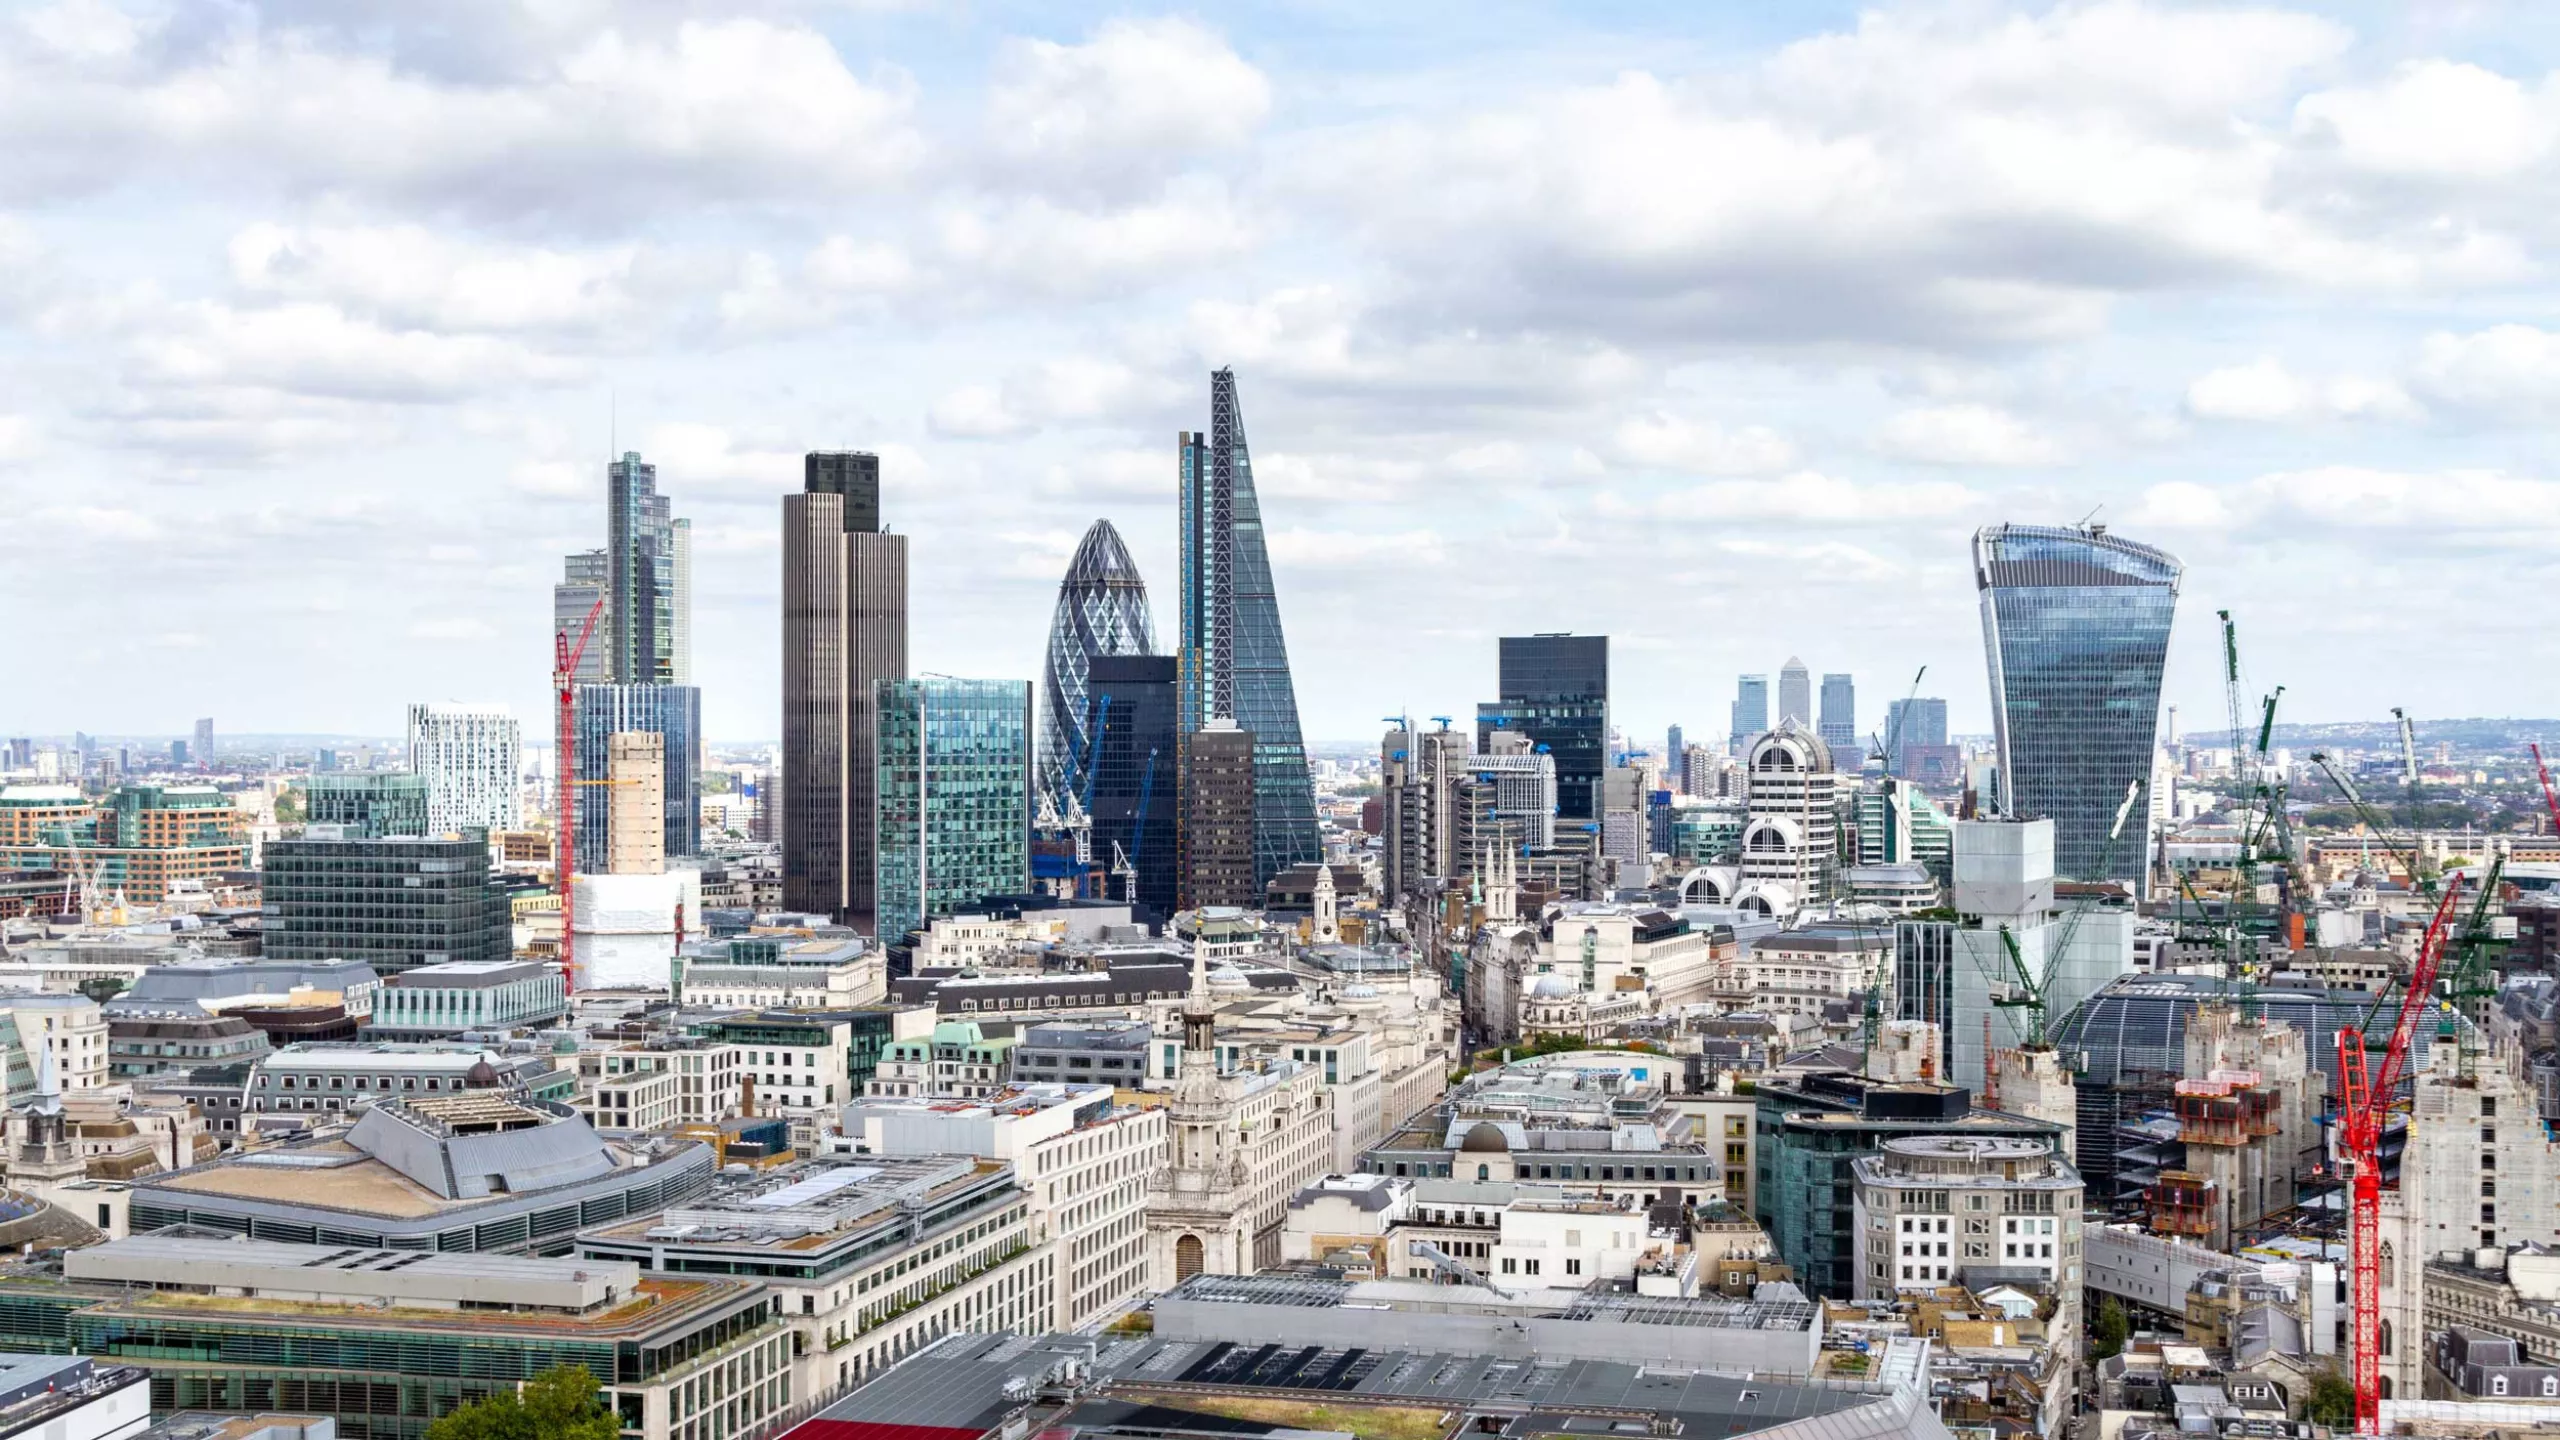 London skyline banner image